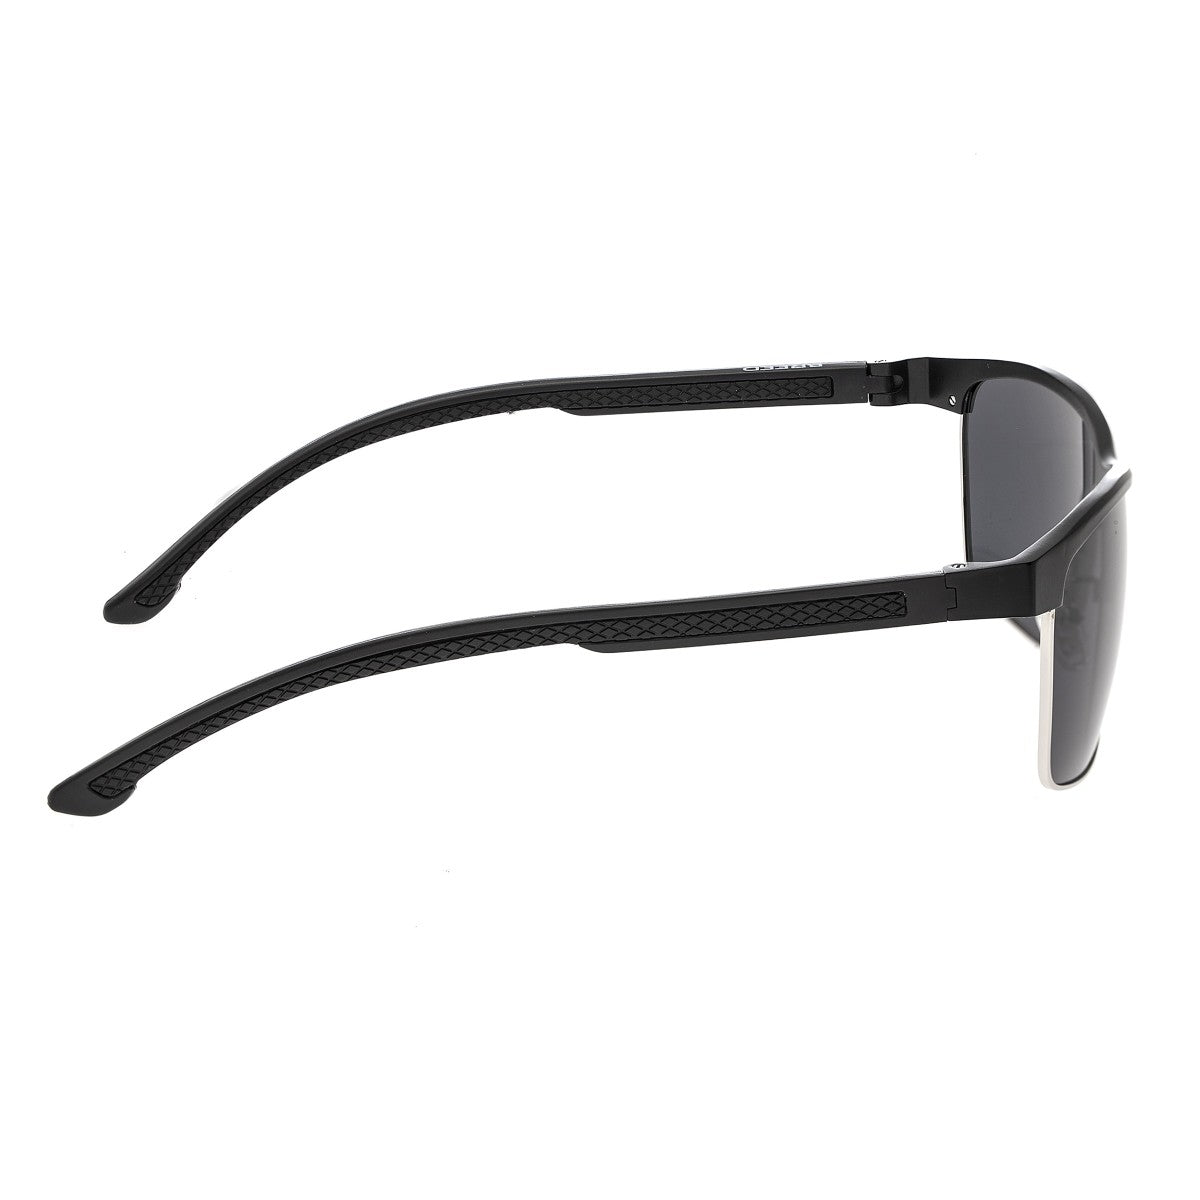 Breed Bode Aluminium Polarized Sunglasses - Black/Black - BSG026BK